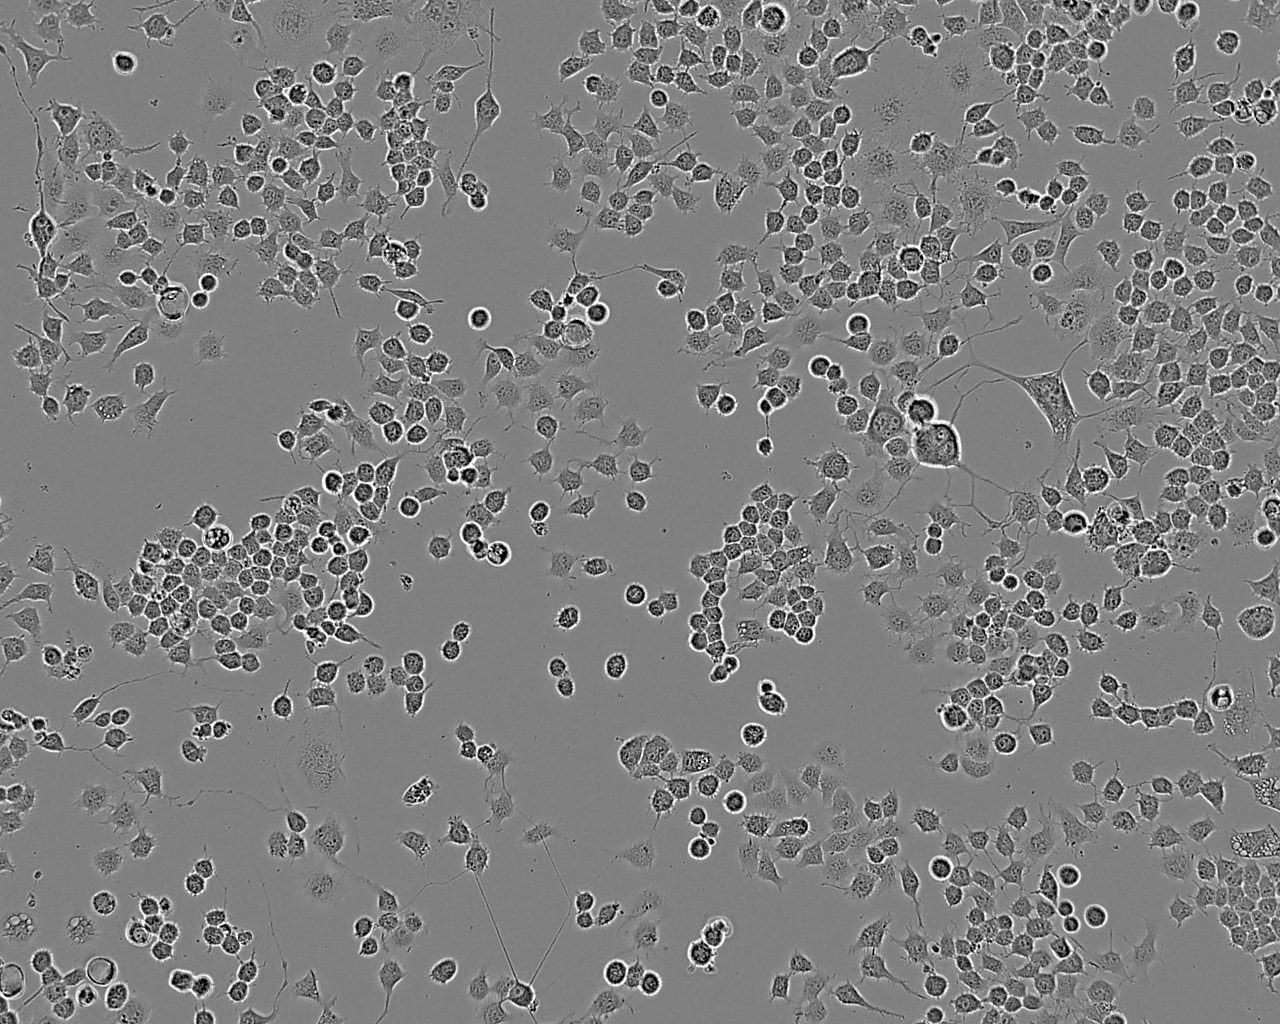 SW527 Cell:人乳腺癌细胞系,SW527 Cell